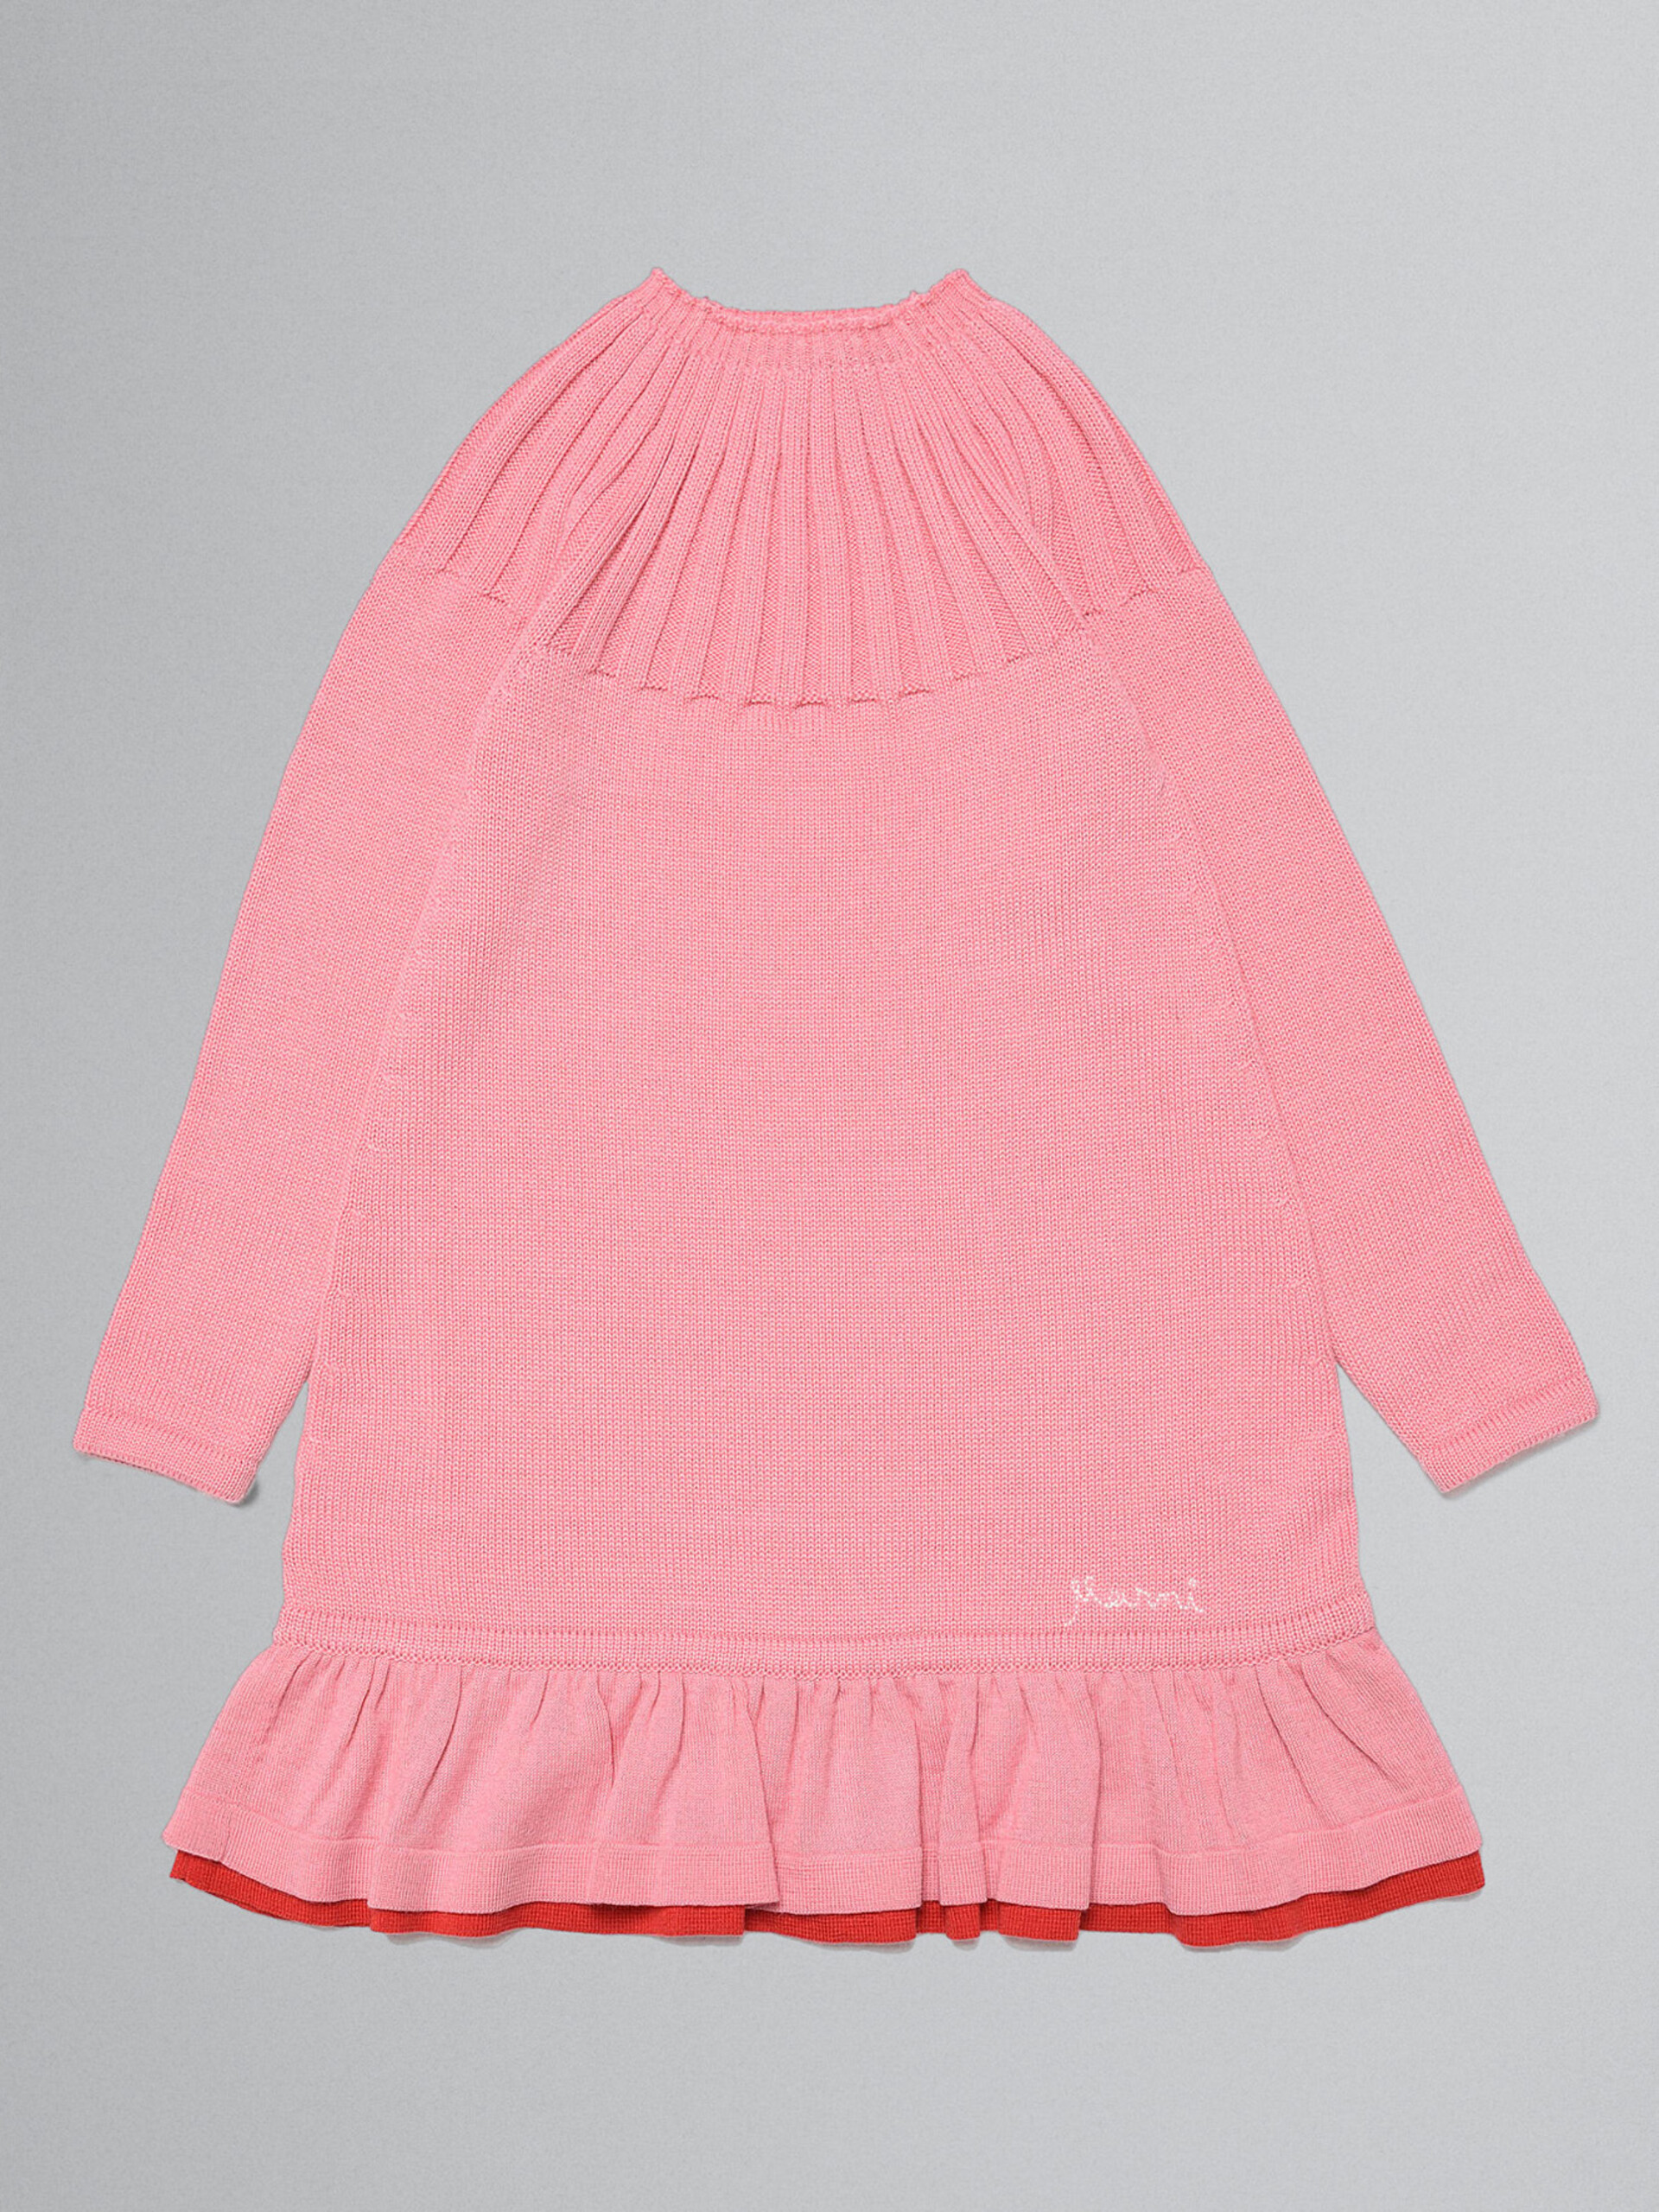 Pink jumper dress with flounce hem - Dresses - Image 1